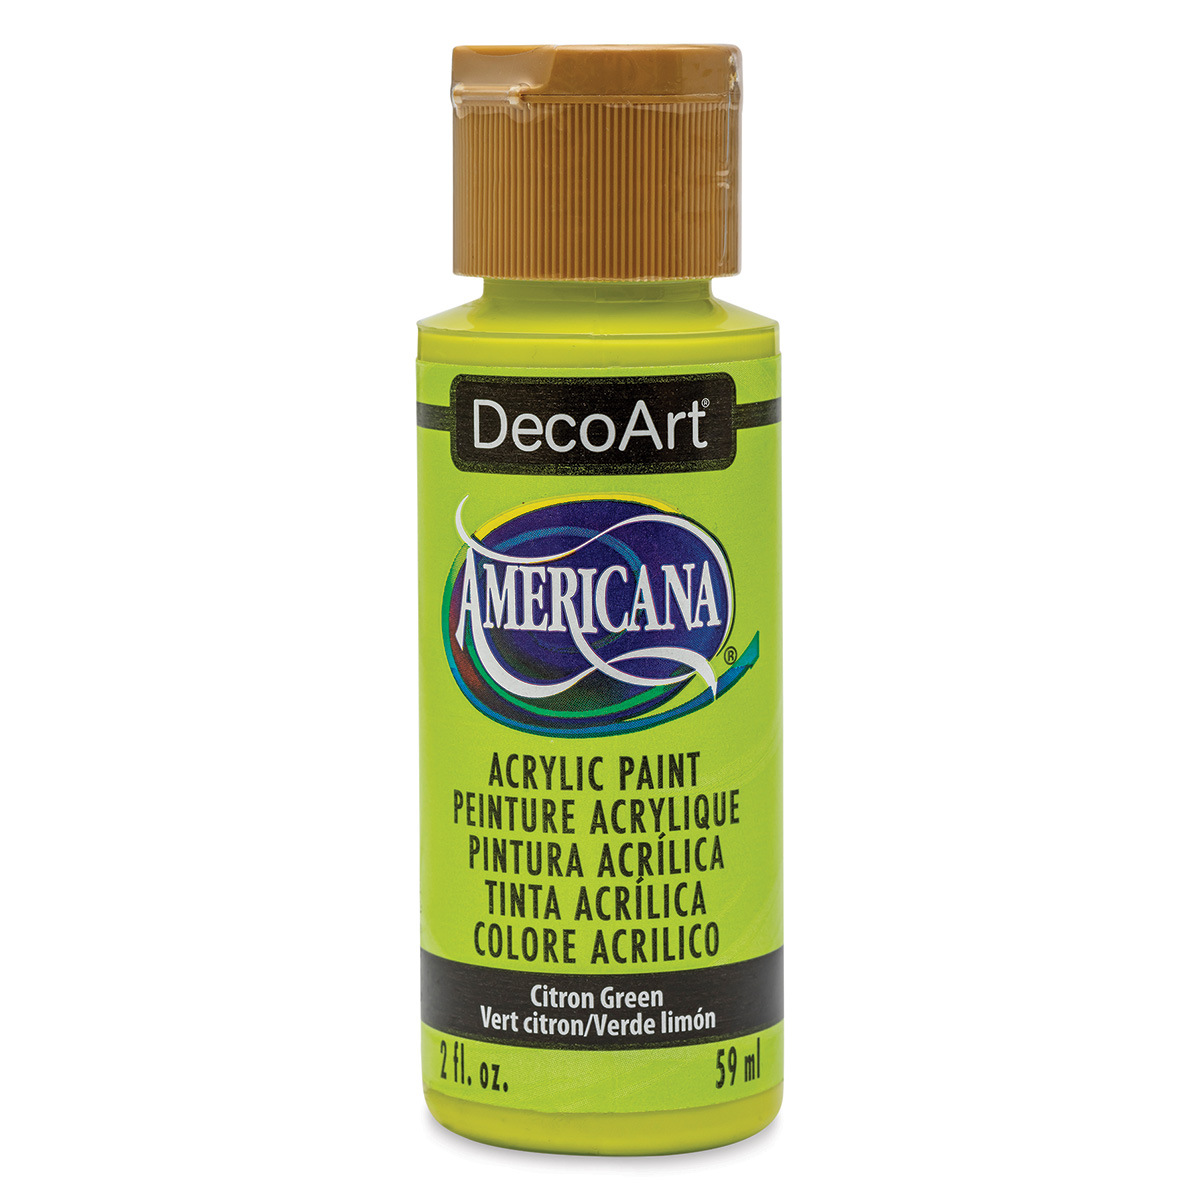 DecoArt, Americana Acrylic Paint, Matcha Green, 2oz